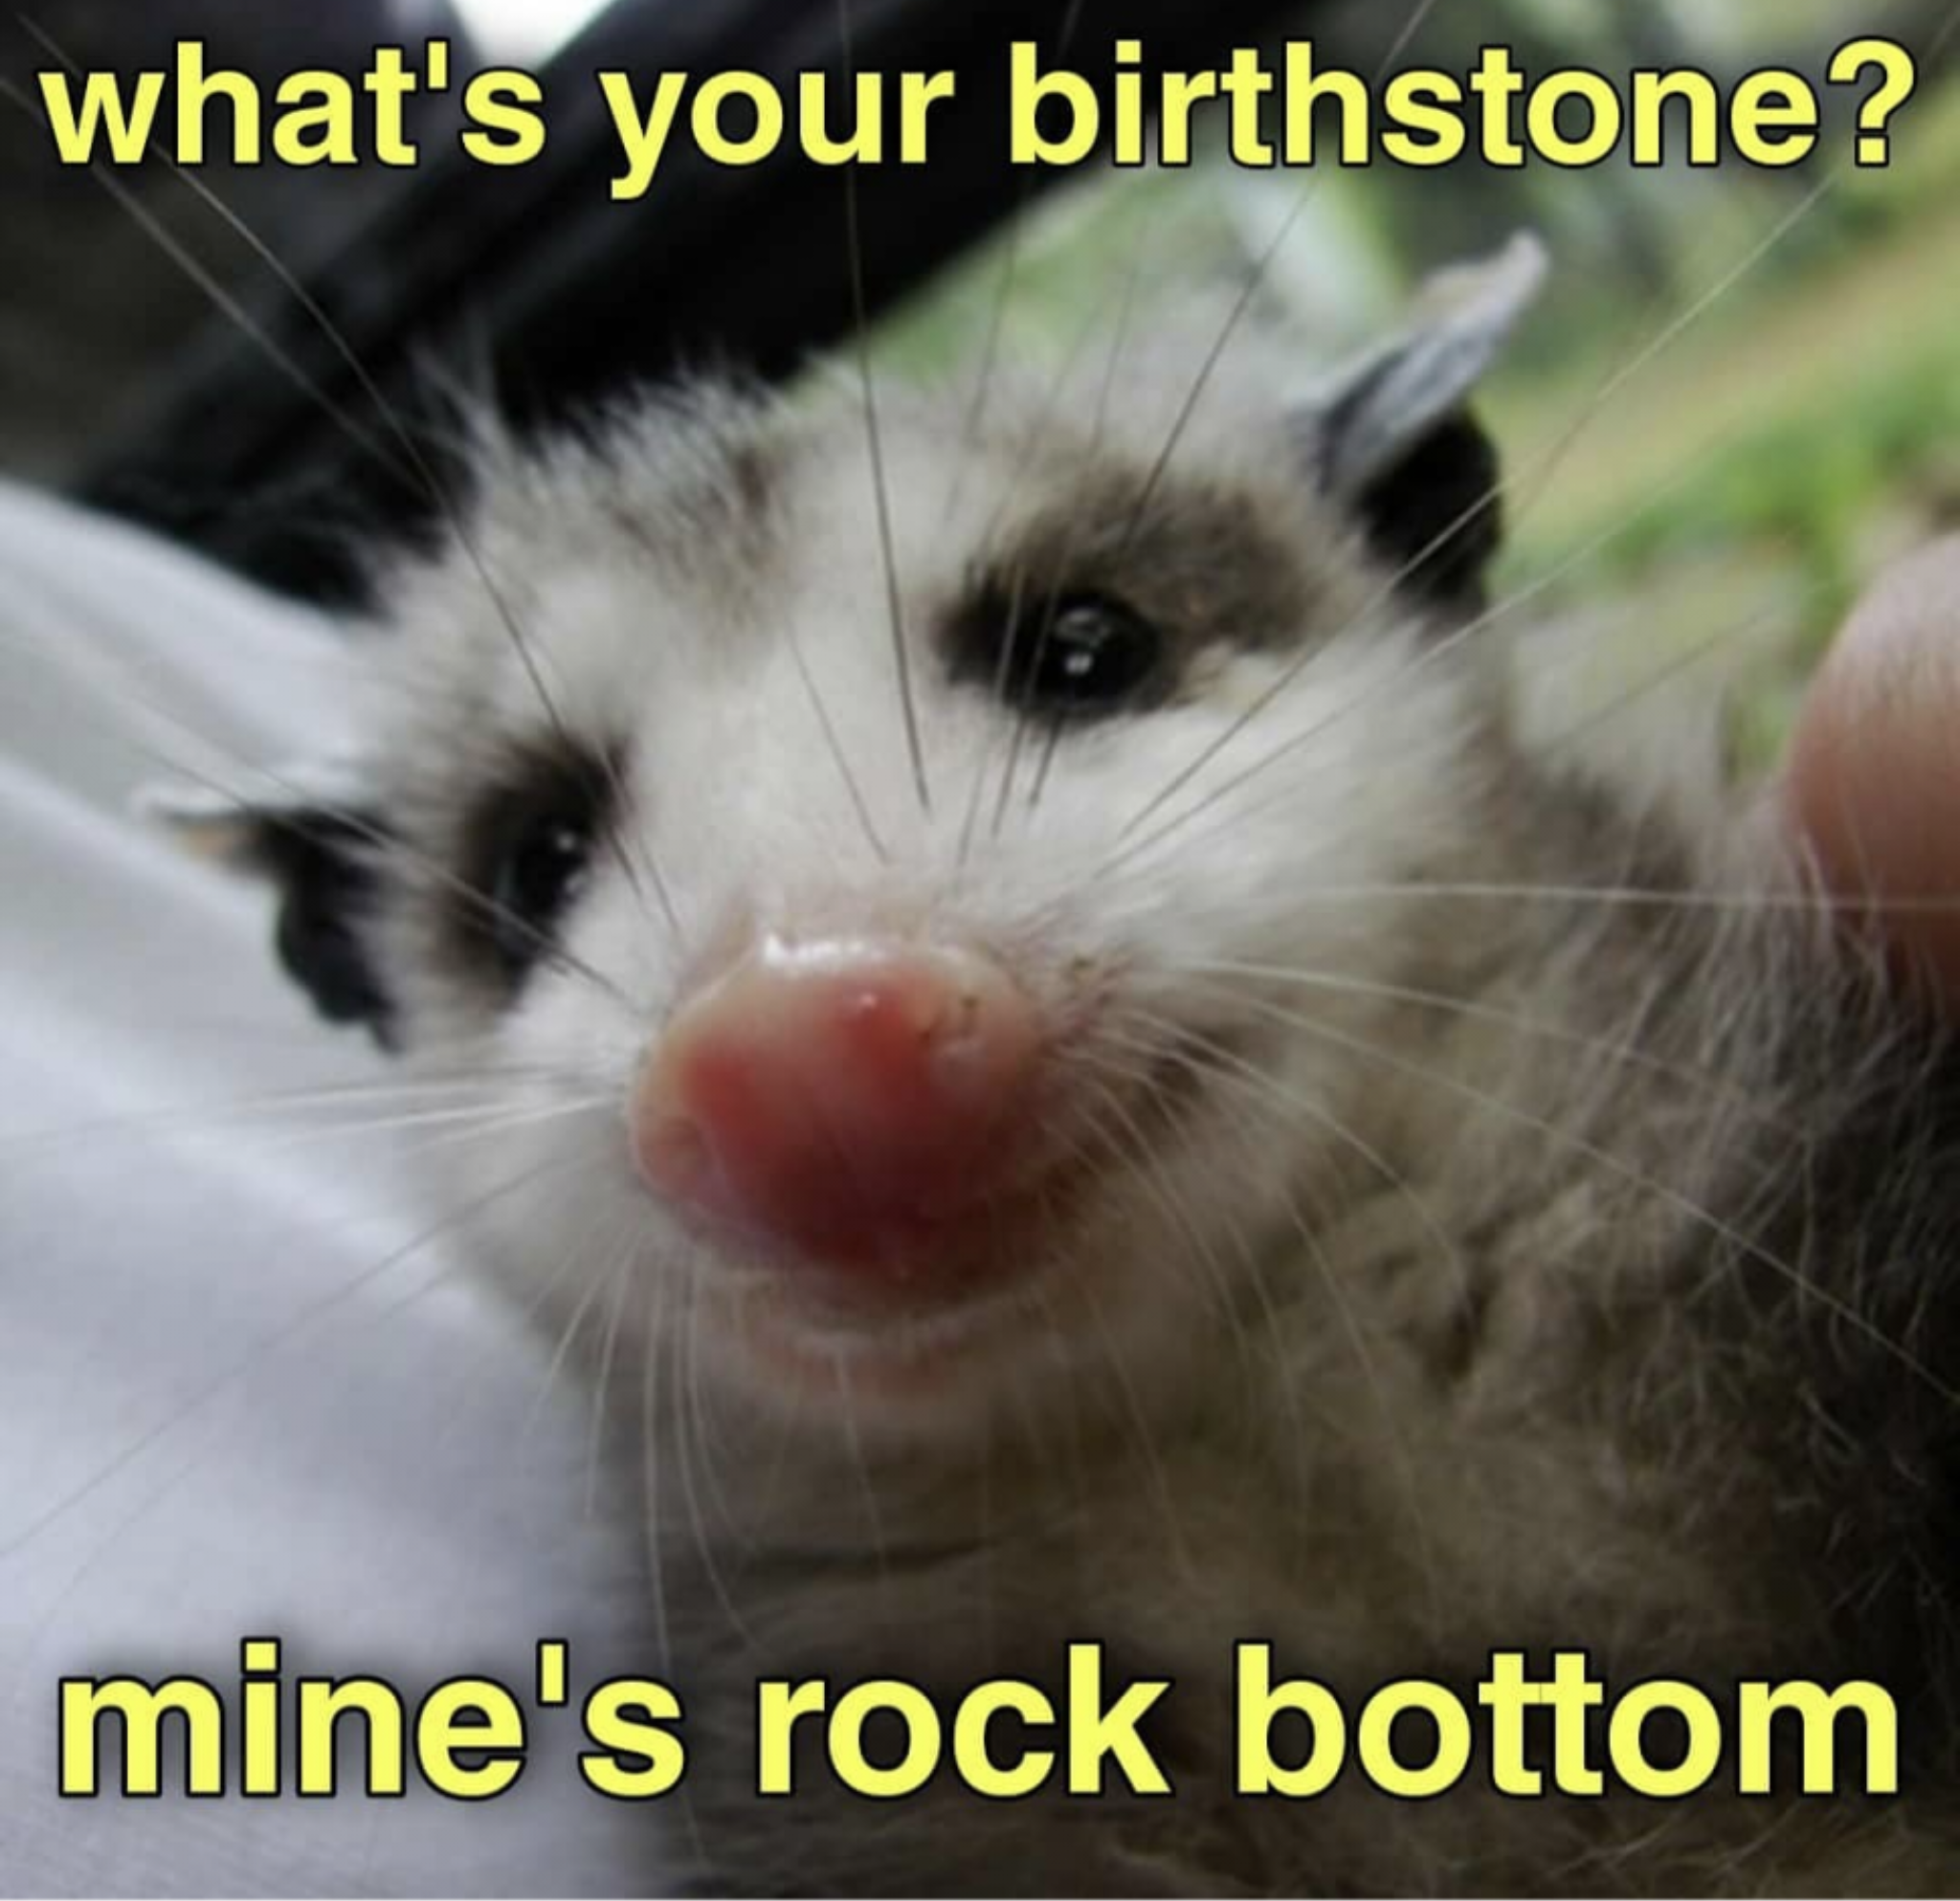 virginia opossum - what's your birthstone? mine's rock bottom